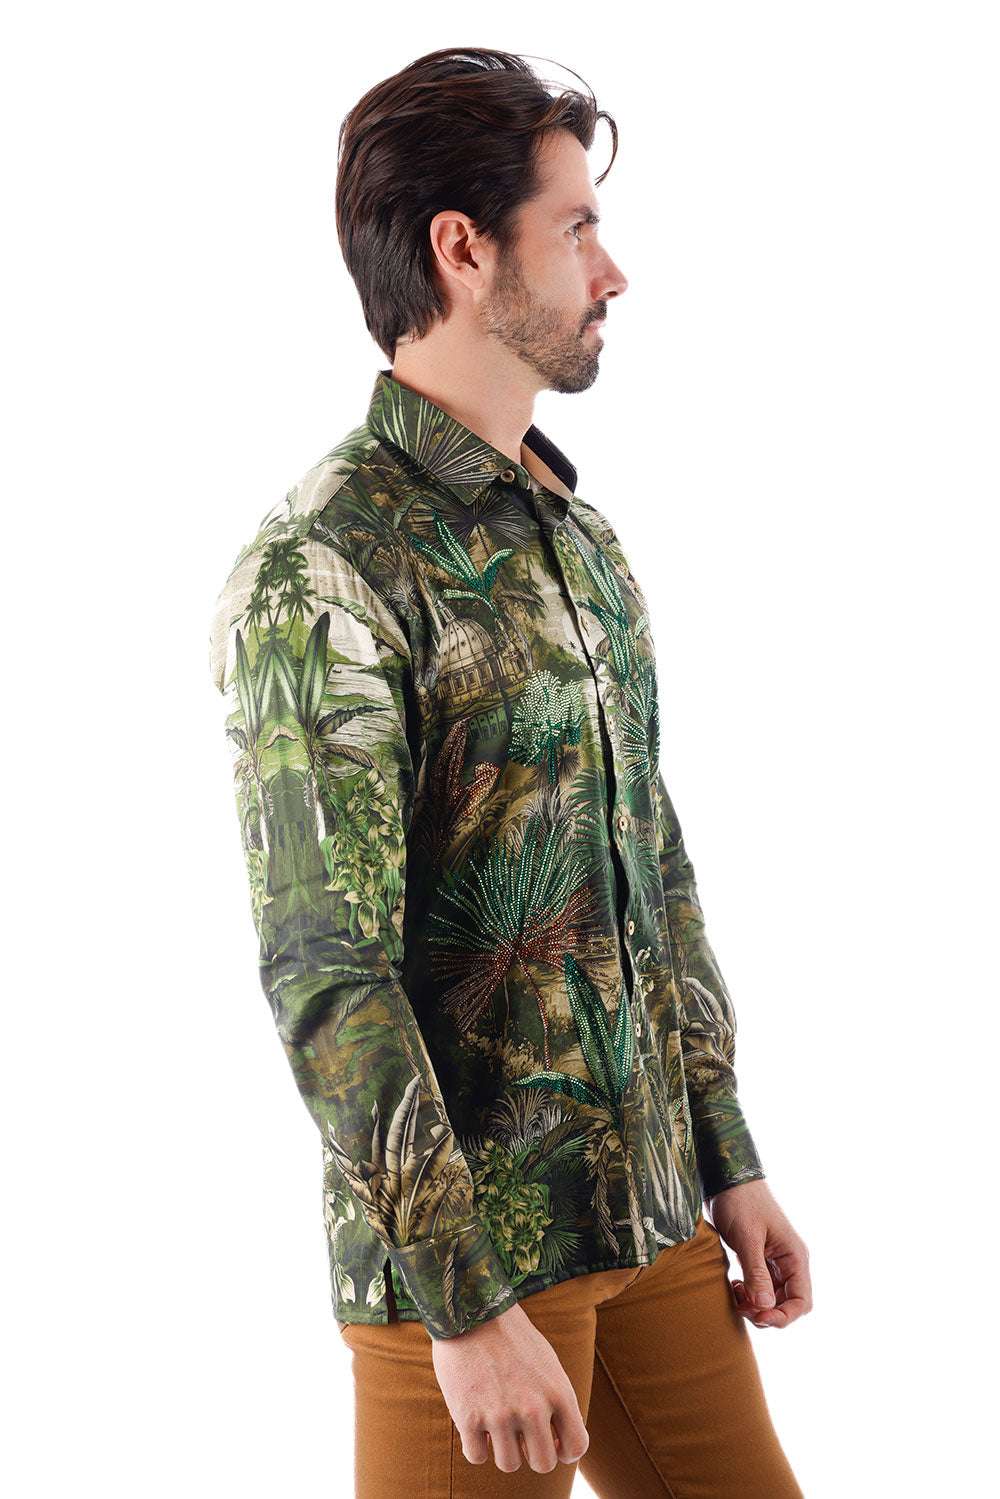 BARABAS Men's Rhinestone Floral Long Sleeve Shirts 3SPR425 Olive